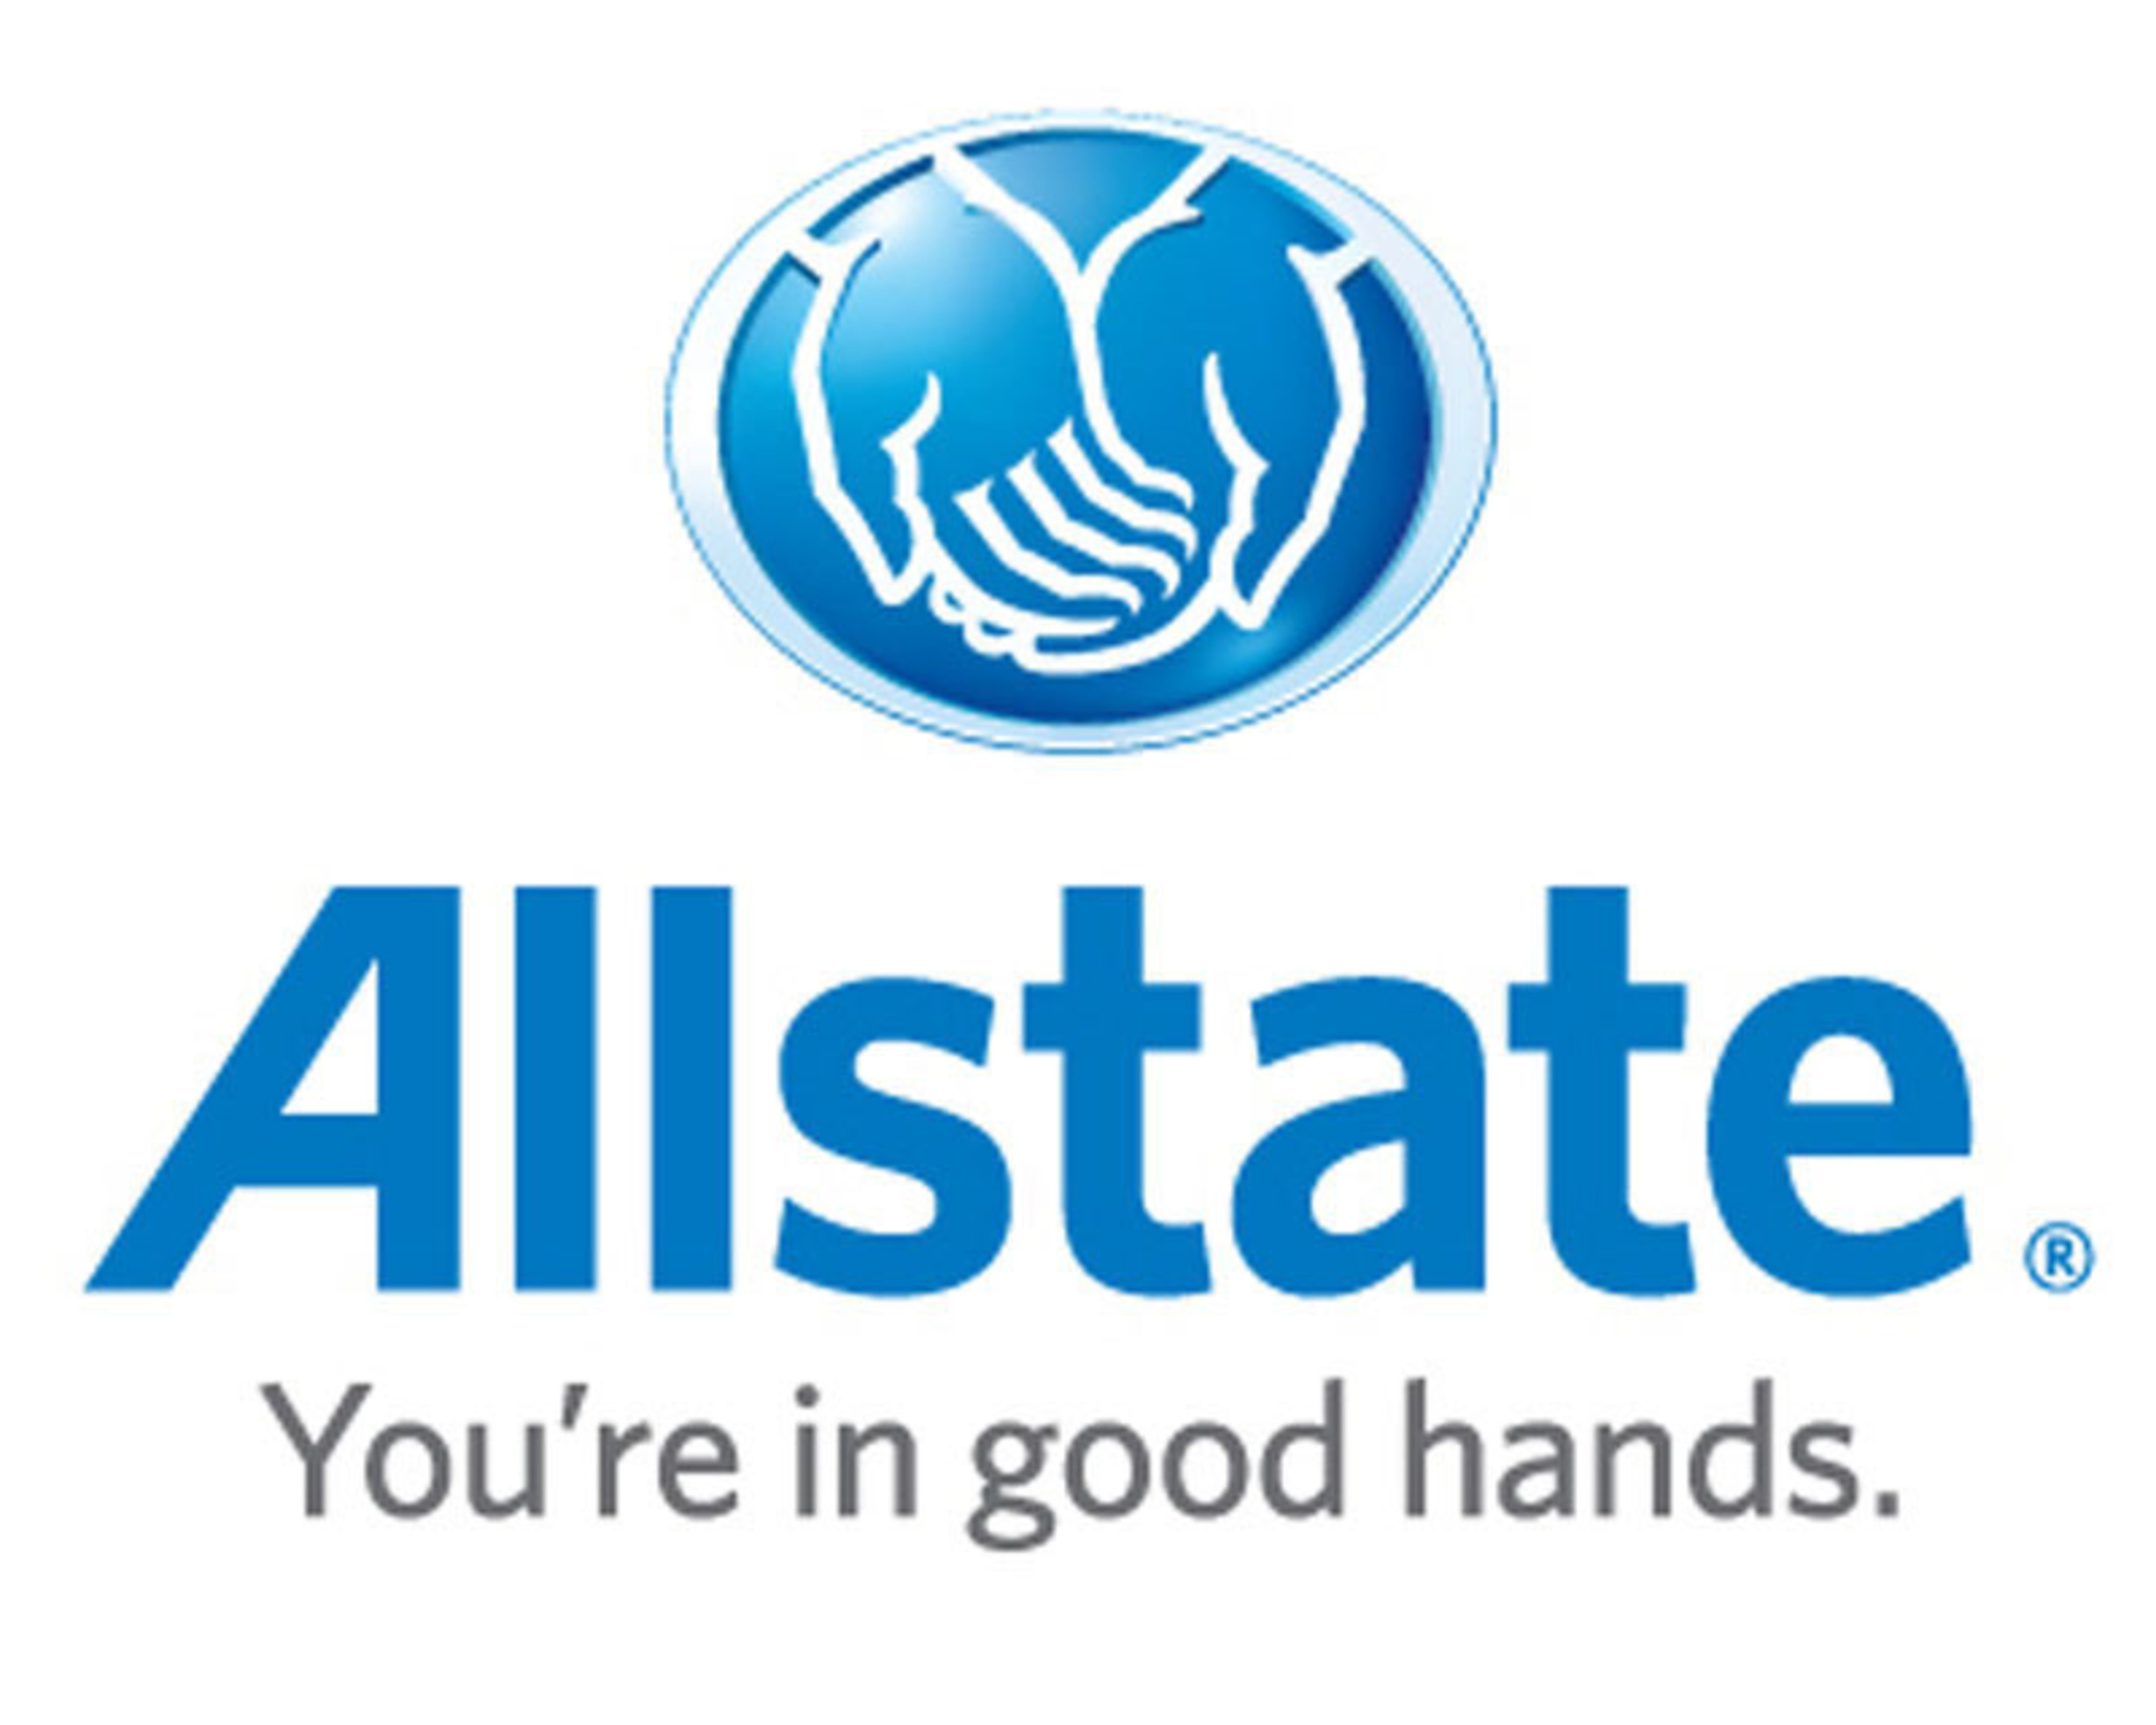 Allstate logo. (PRNewsFoto/Allstate Insurance Company) (PRNewsFoto/) (PRNewsFoto/)